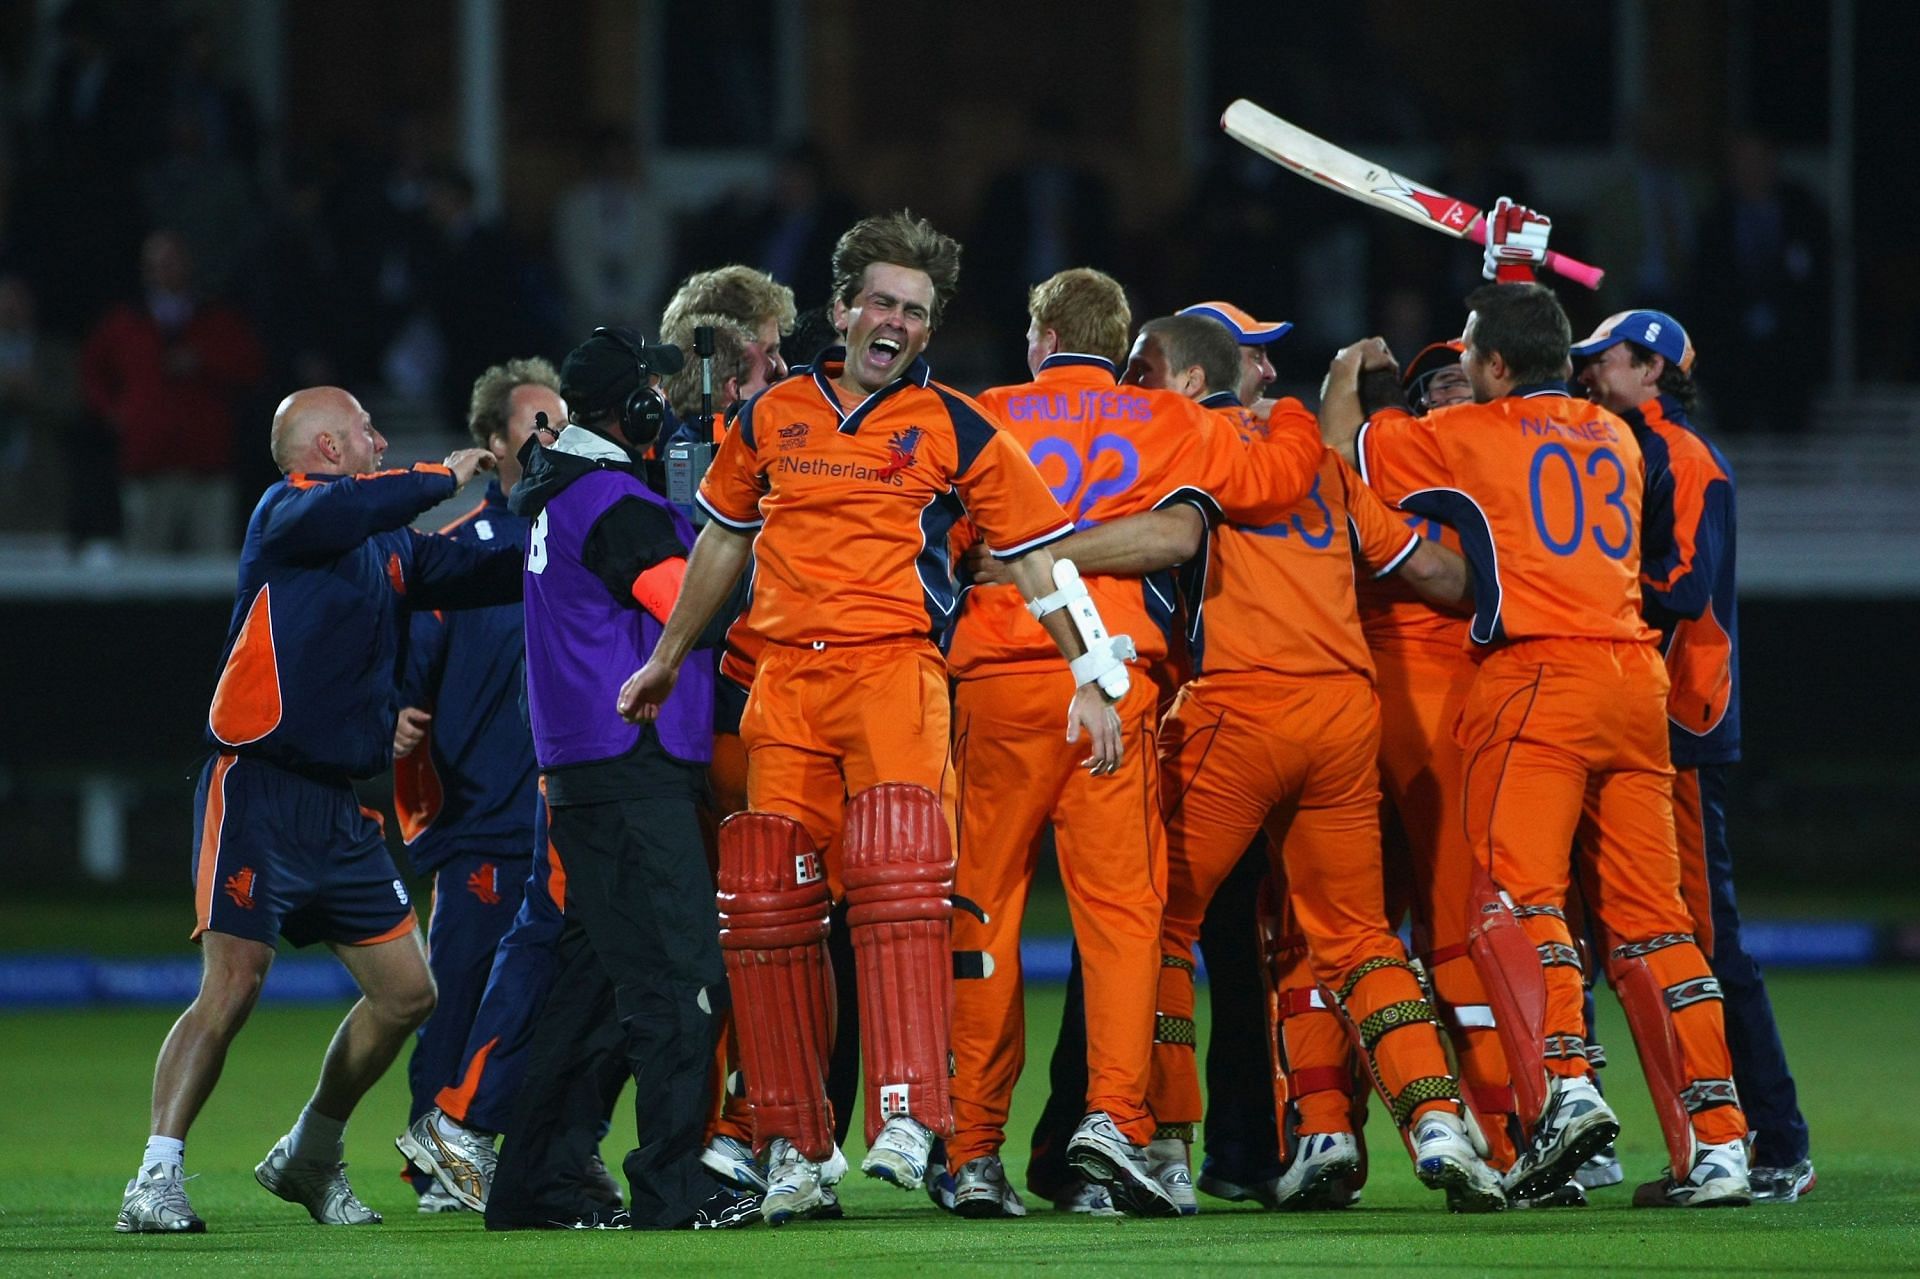 England v Netherlands - ICC Twenty20 World Cup